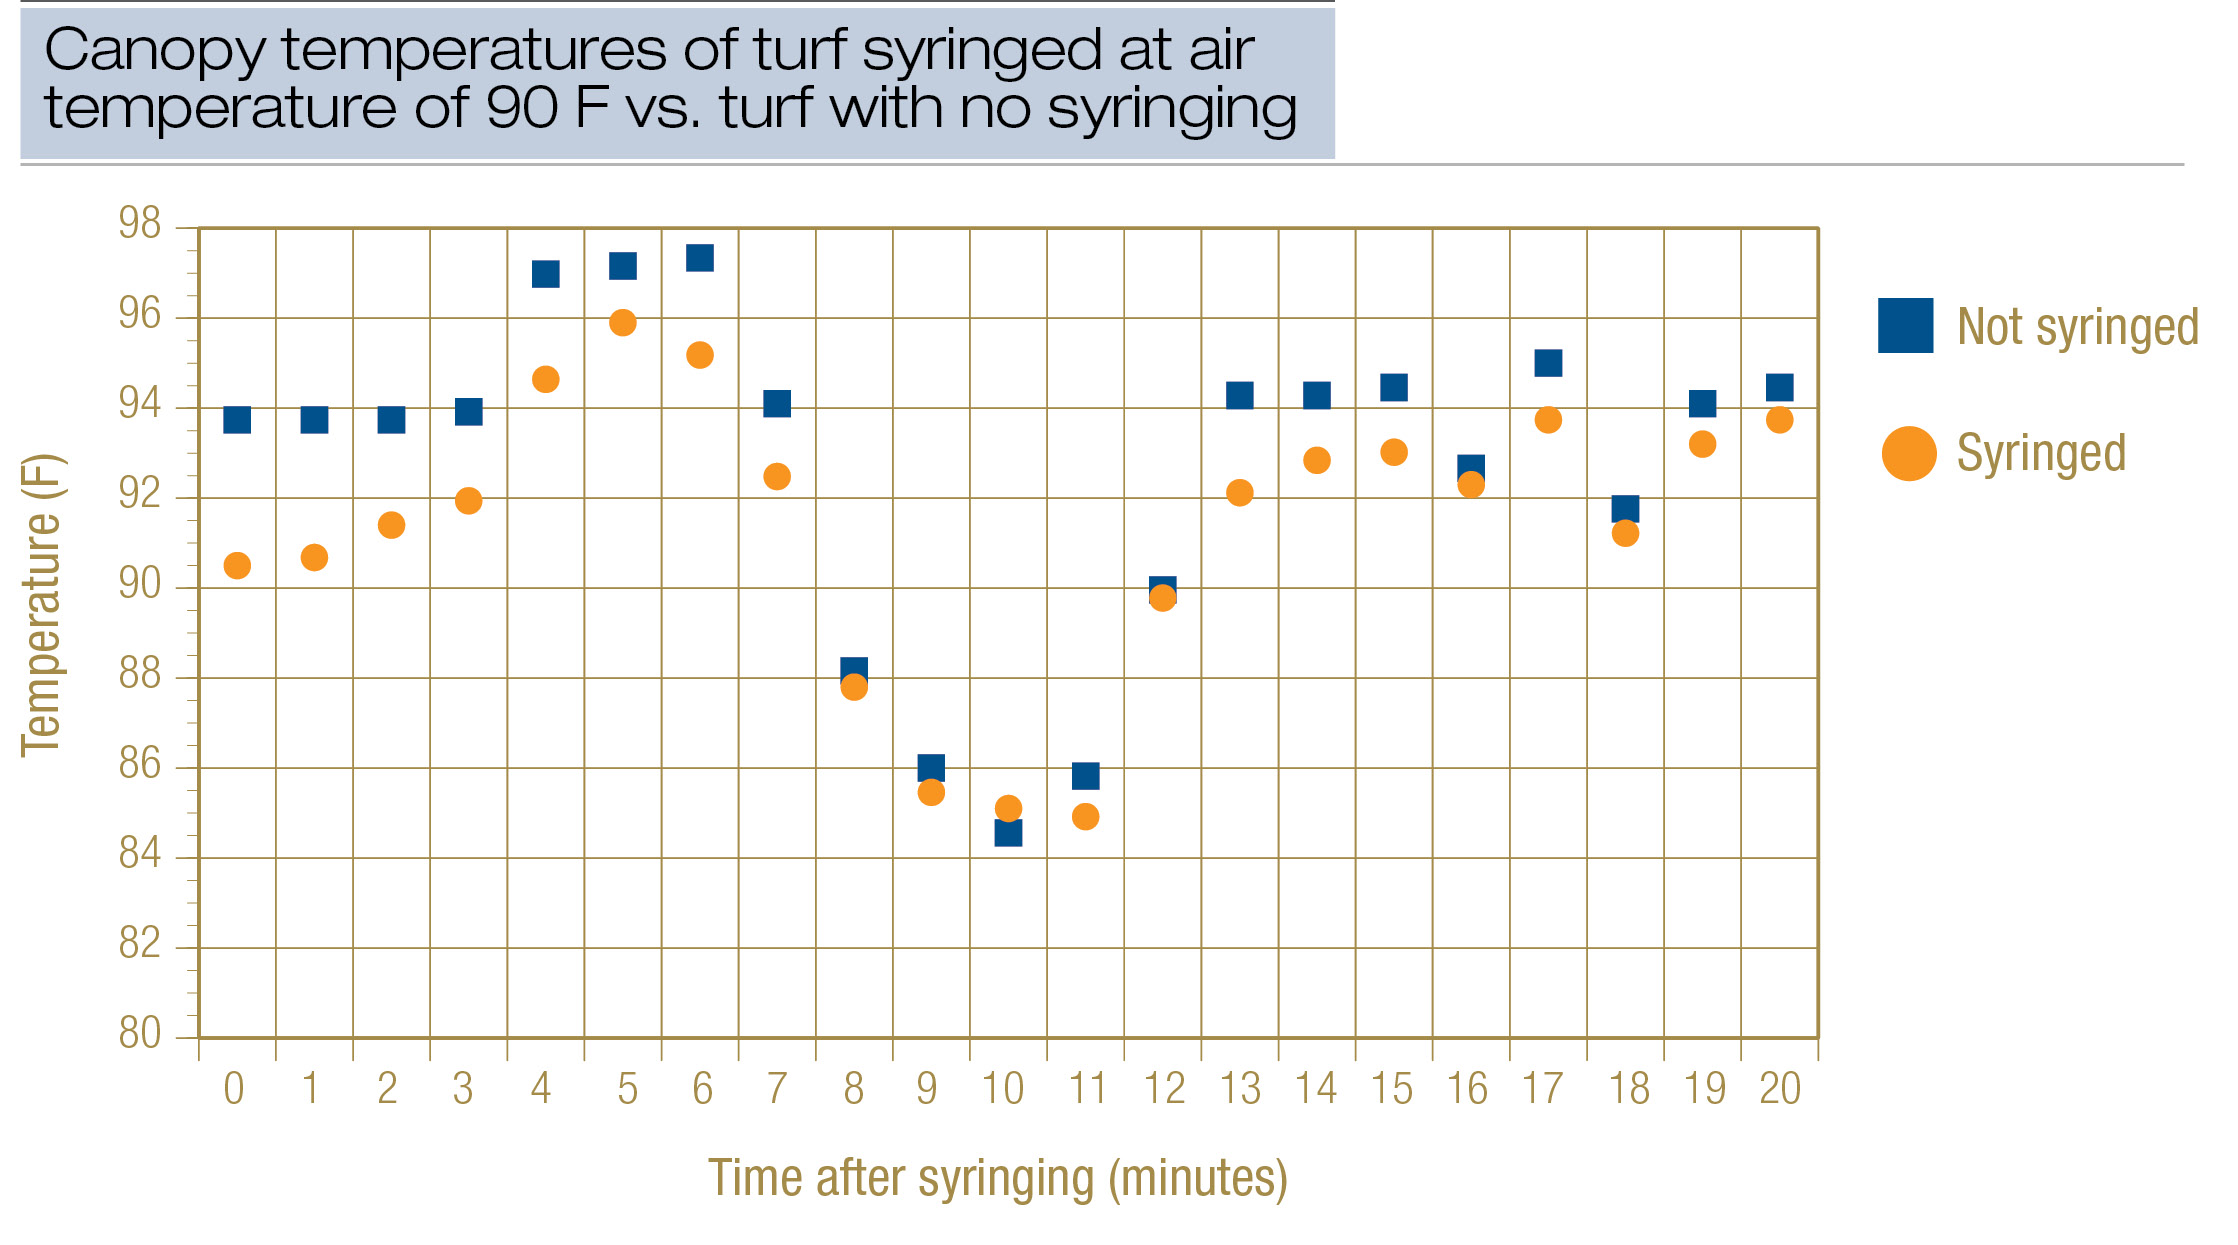 Turfgrass canopy syringing temperatures